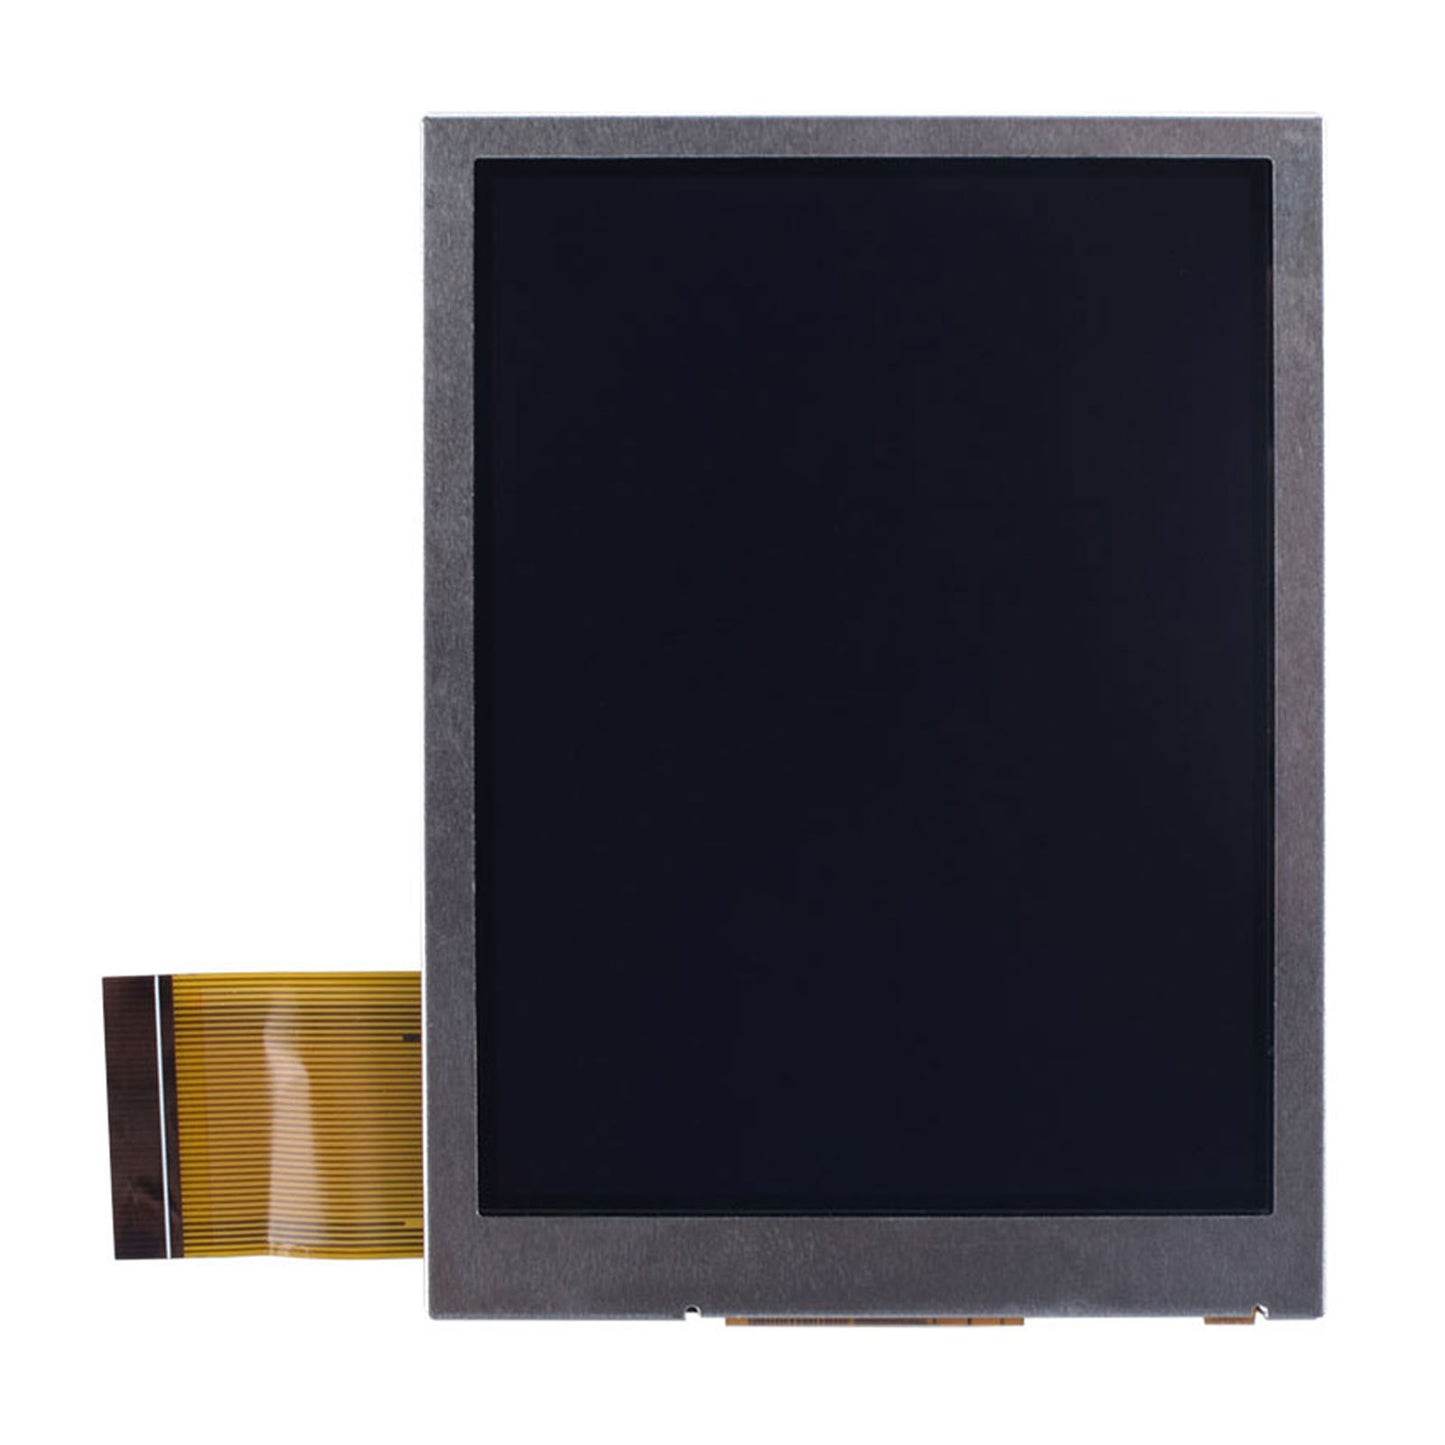 DisplayModule 3.5" 480x640 Transflective Display Panel - RGB